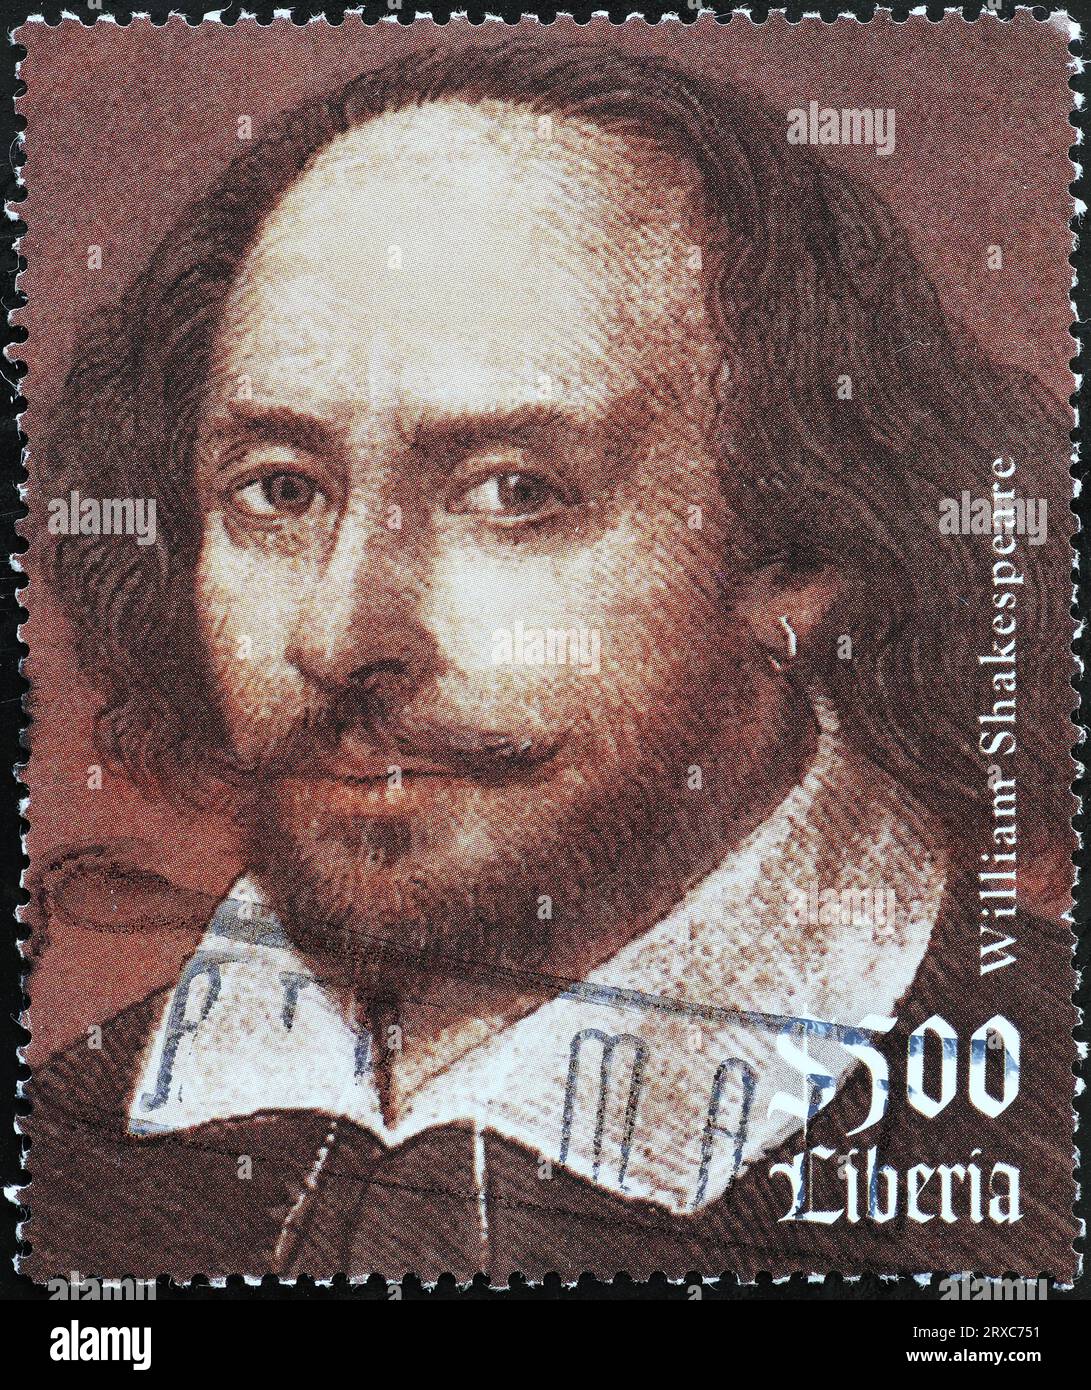 Portrait of Shakespeare on postage stamp of Liberia Stock Photo